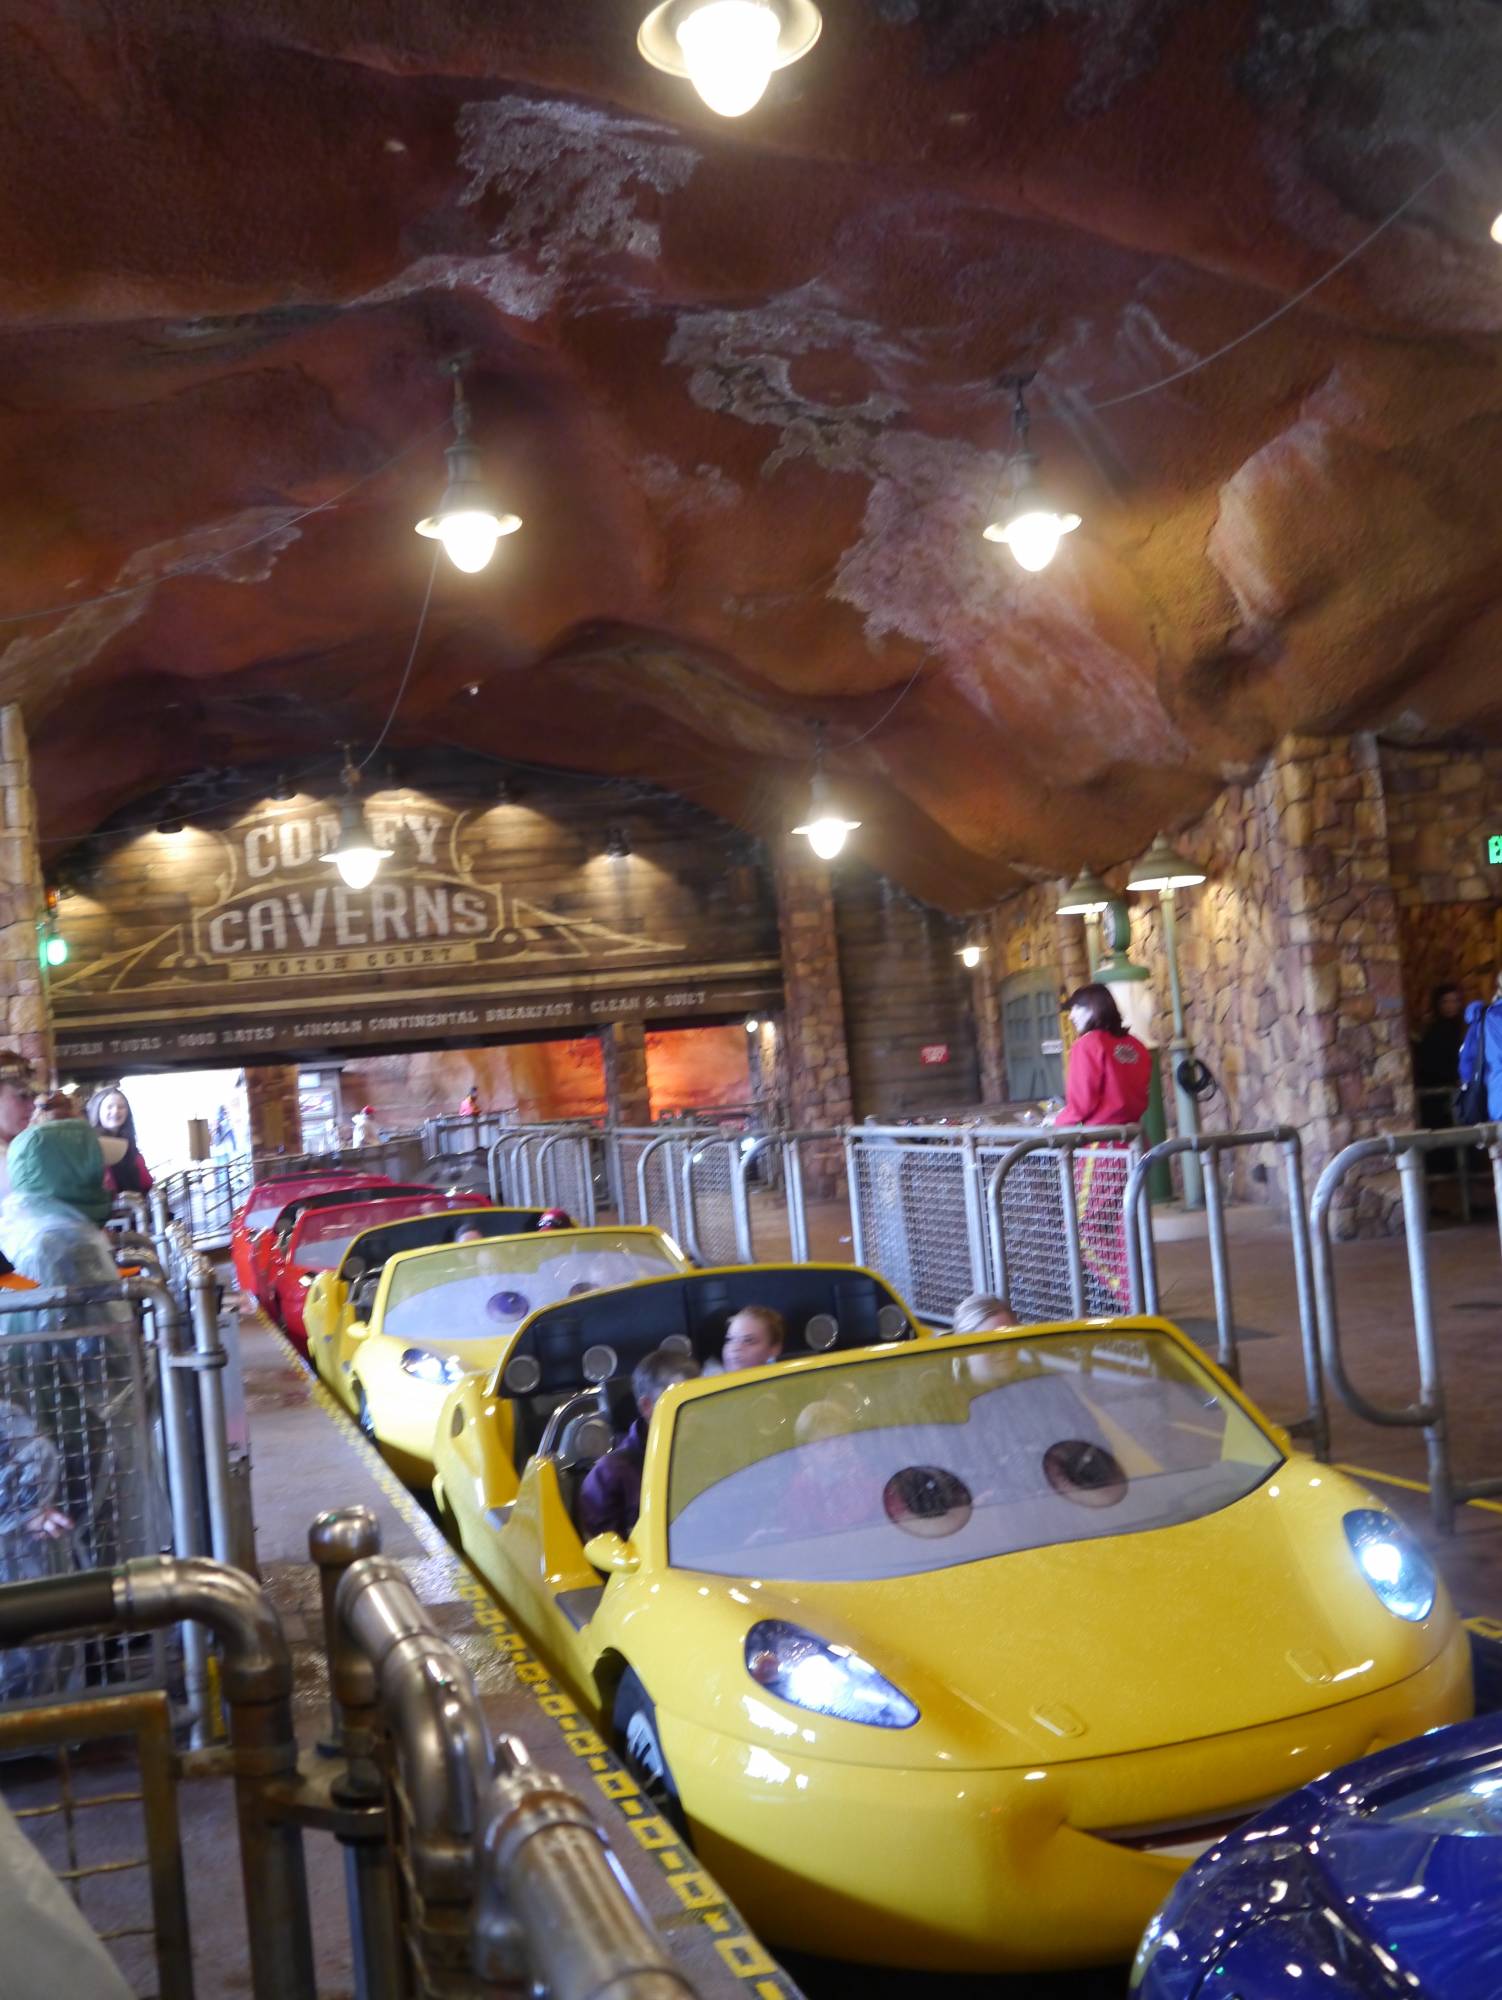 Discover the differences between planning a trip to Disneyland versus Walt Disney World |PassPorter.com